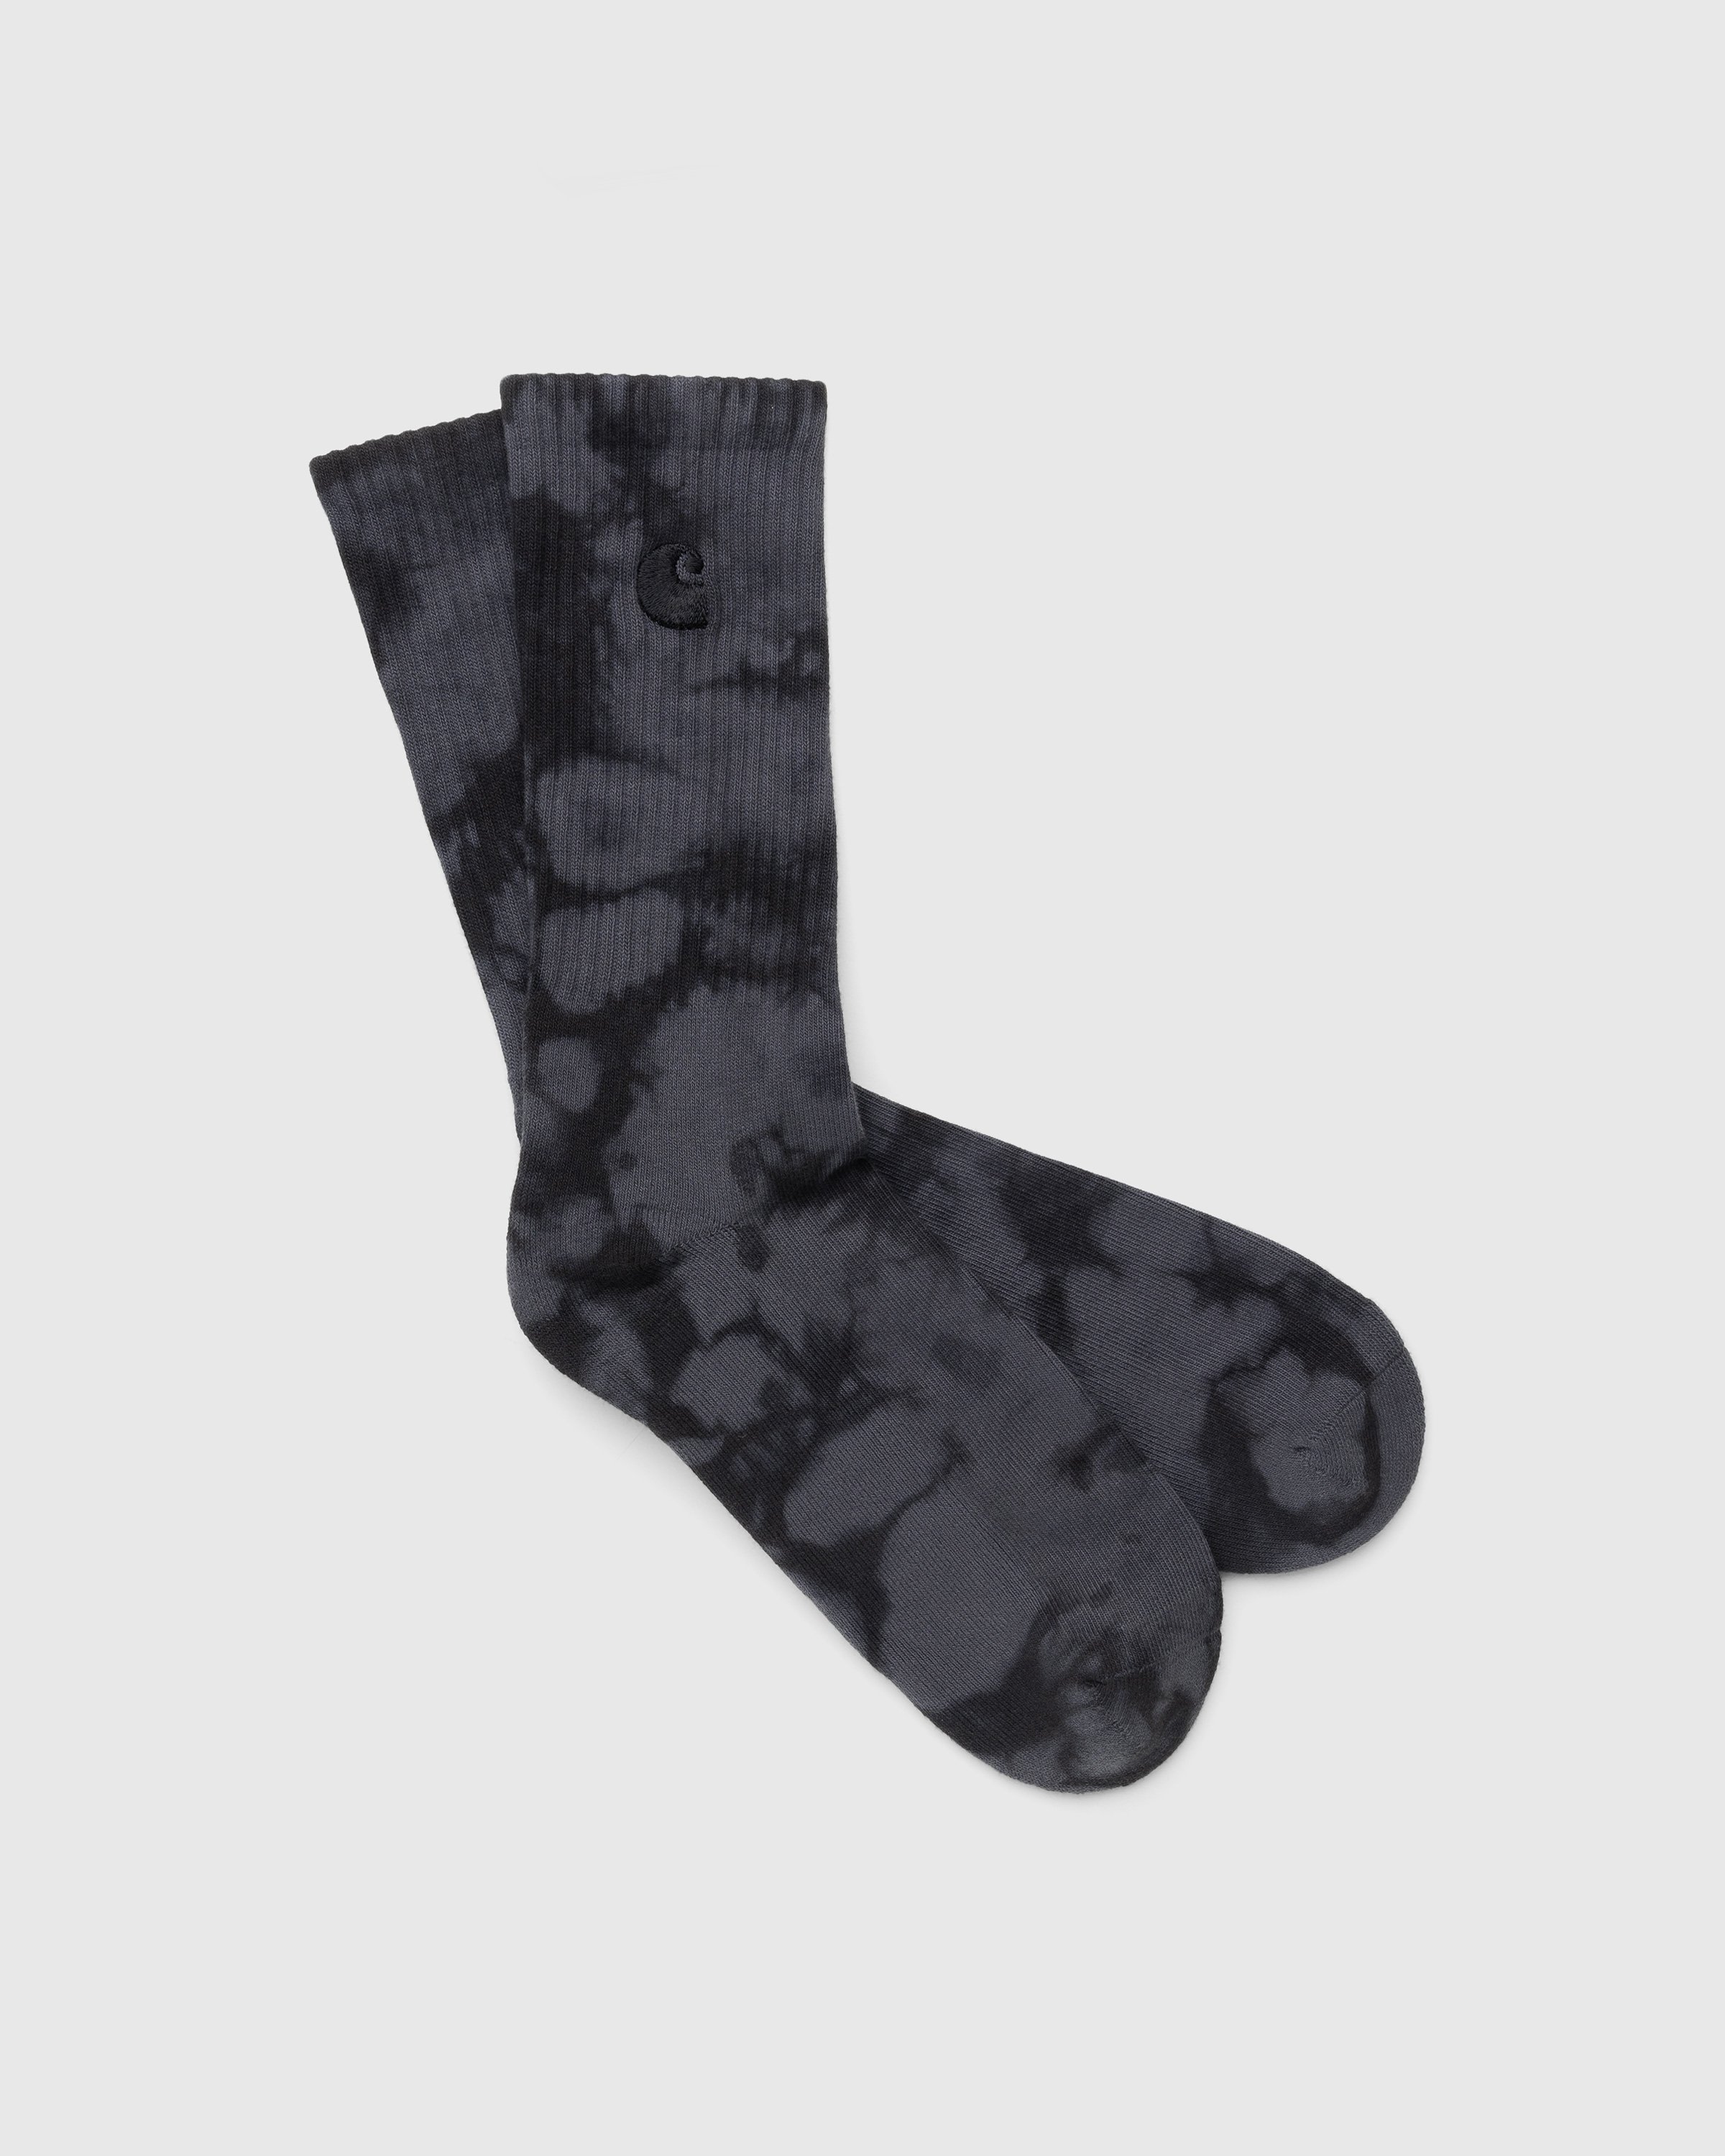 Carhartt WIP - Vista Socks Black - Accessories - Brown - Image 1